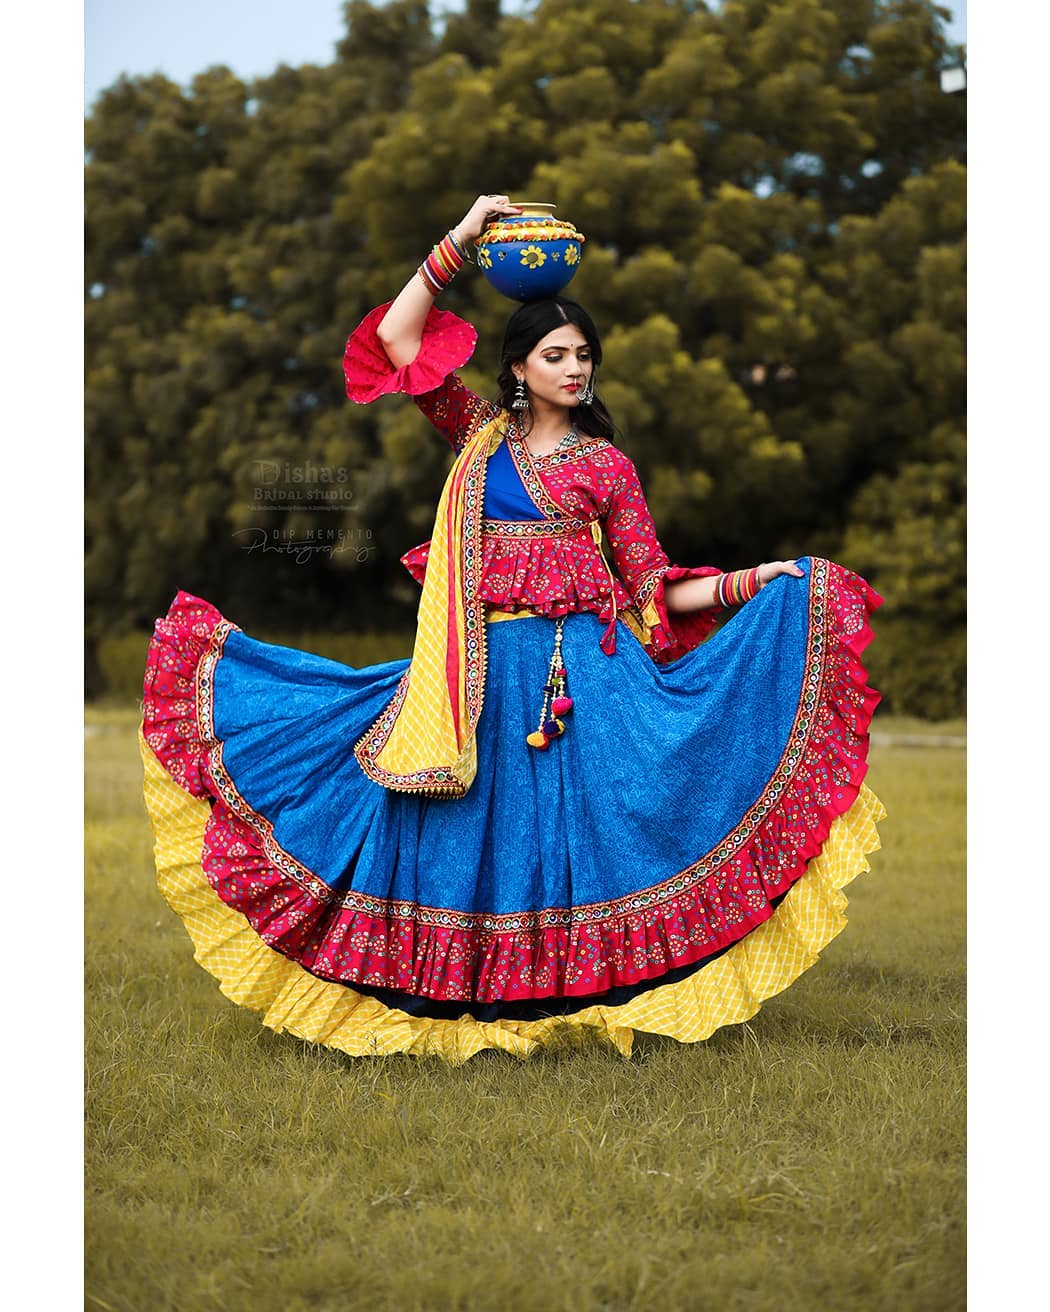 Untill you spread your wings you will have no idea how far you can fly.....#navratri #navratri2019 #navratri2k19
.
MUA: @dishapanchal246 
Shoot: @dip_memento_photography 
@meandmyphotography11
 InFrame: @imug_pandey 
Jewellery: @nancyhandicraft9
Costume by: @rashmithummar

#navratri2019 #photoshoot #ethnic #traditionalart #ahmedabad #gujarati  #pop #makeup #navratrichaniyacholi #chaniyacholi #indianfashionblogger  #fashionblogger #makeuptutorial #weddingdress  #instapic #bollywood #bollywoodhotness #bollywoodactresses #indian #pic #picoftheday #photooftheday  #festivalofnations #festival #9924227745 #dipmementophotography #dip_memento_photography